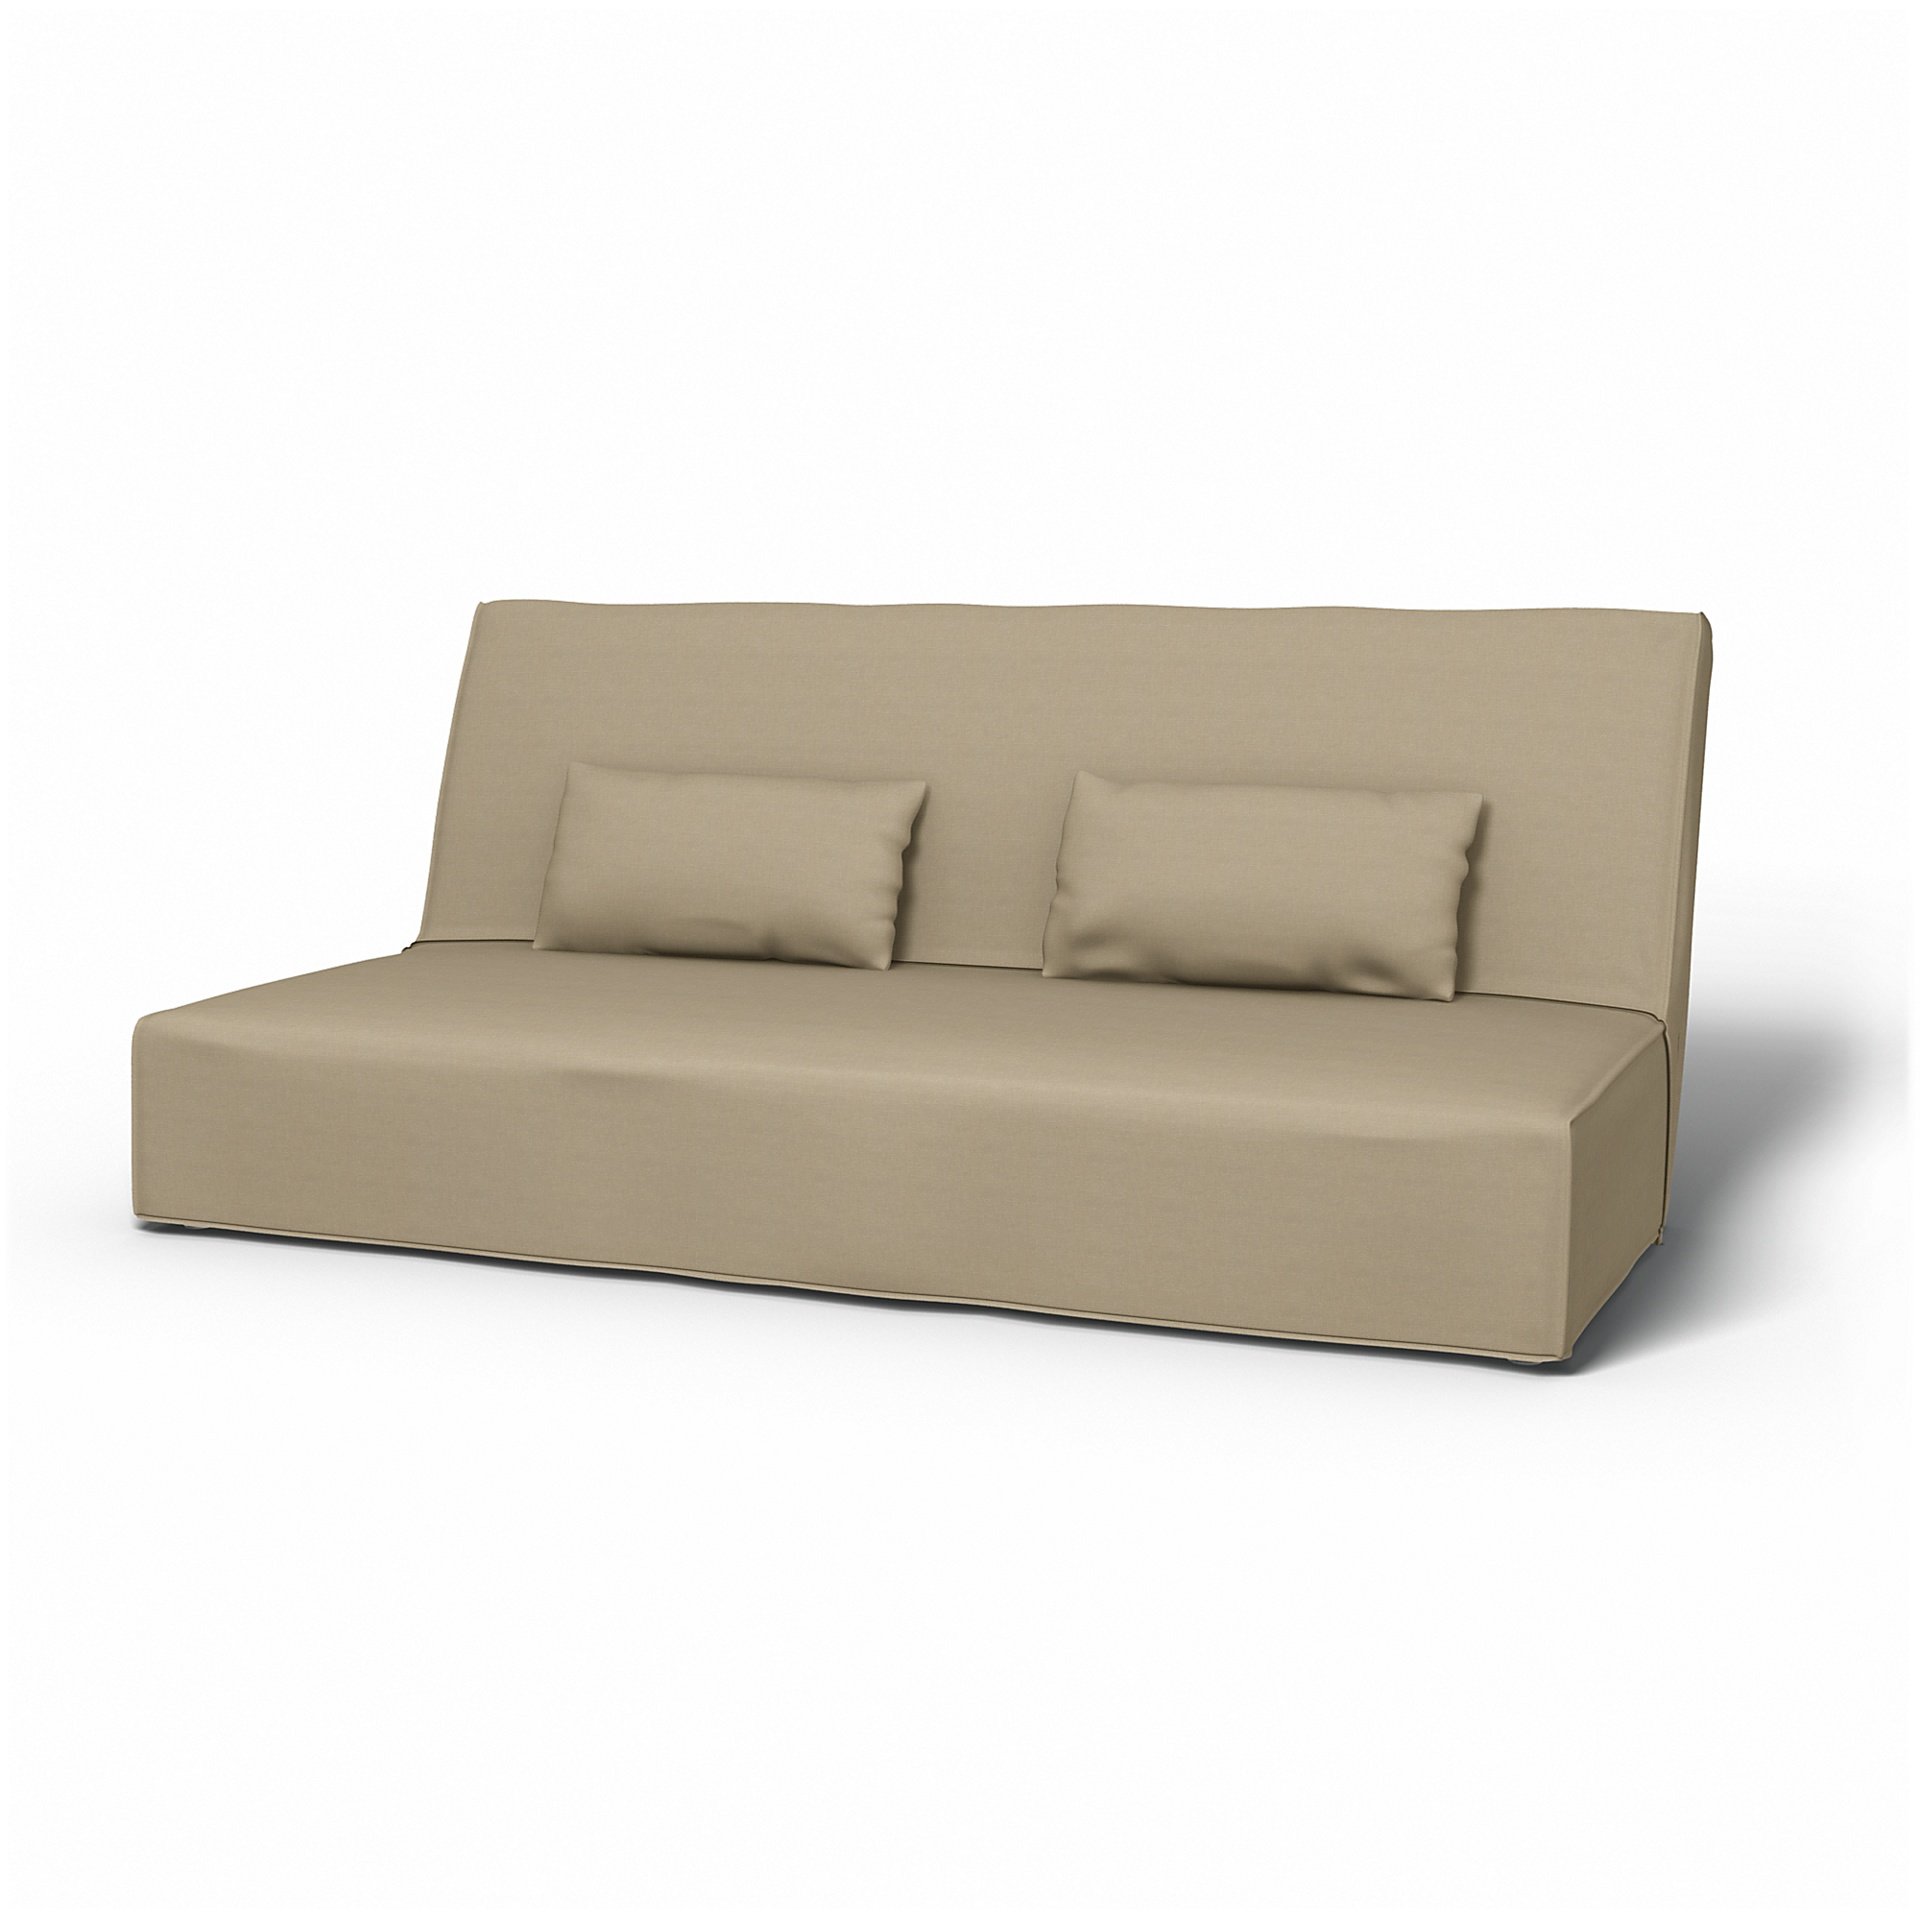 IKEA - Beddinge Sofa Bed Cover, Tan, Linen - Bemz